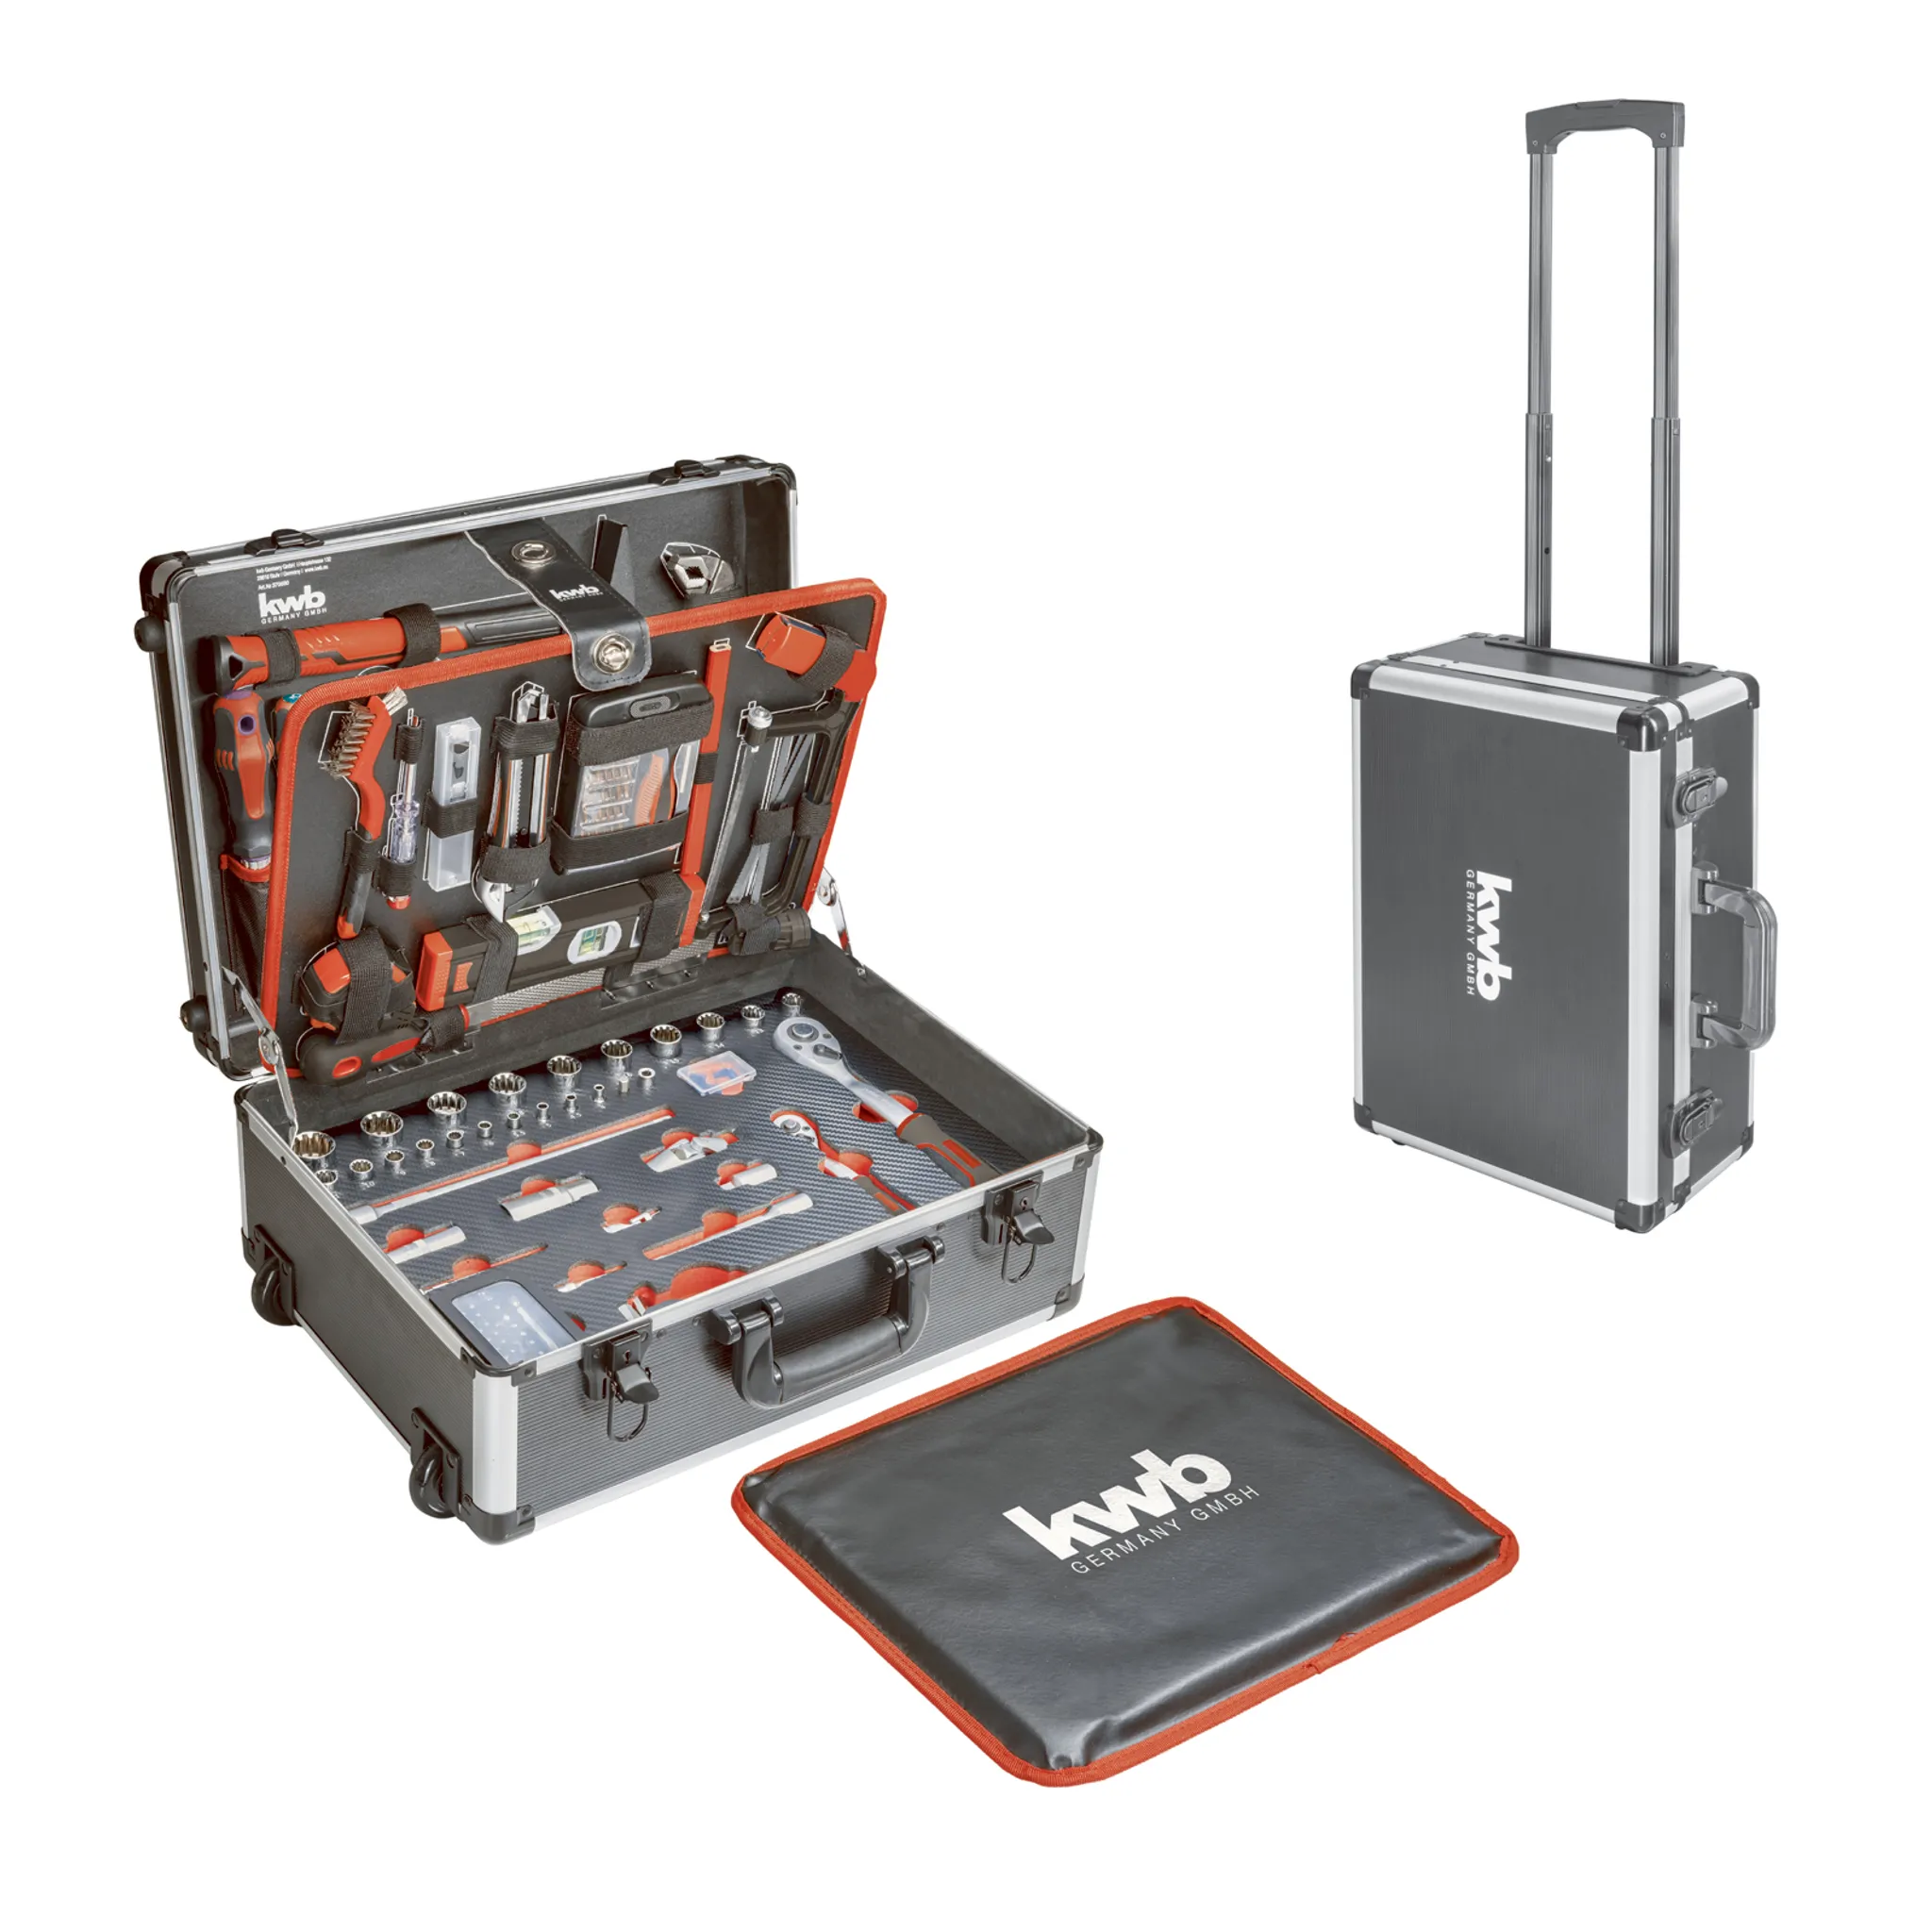 Trolley Werkzeug-Koffer -teilig, Werkzeug-Set, inkl. kwb 175 robust gefüllt,